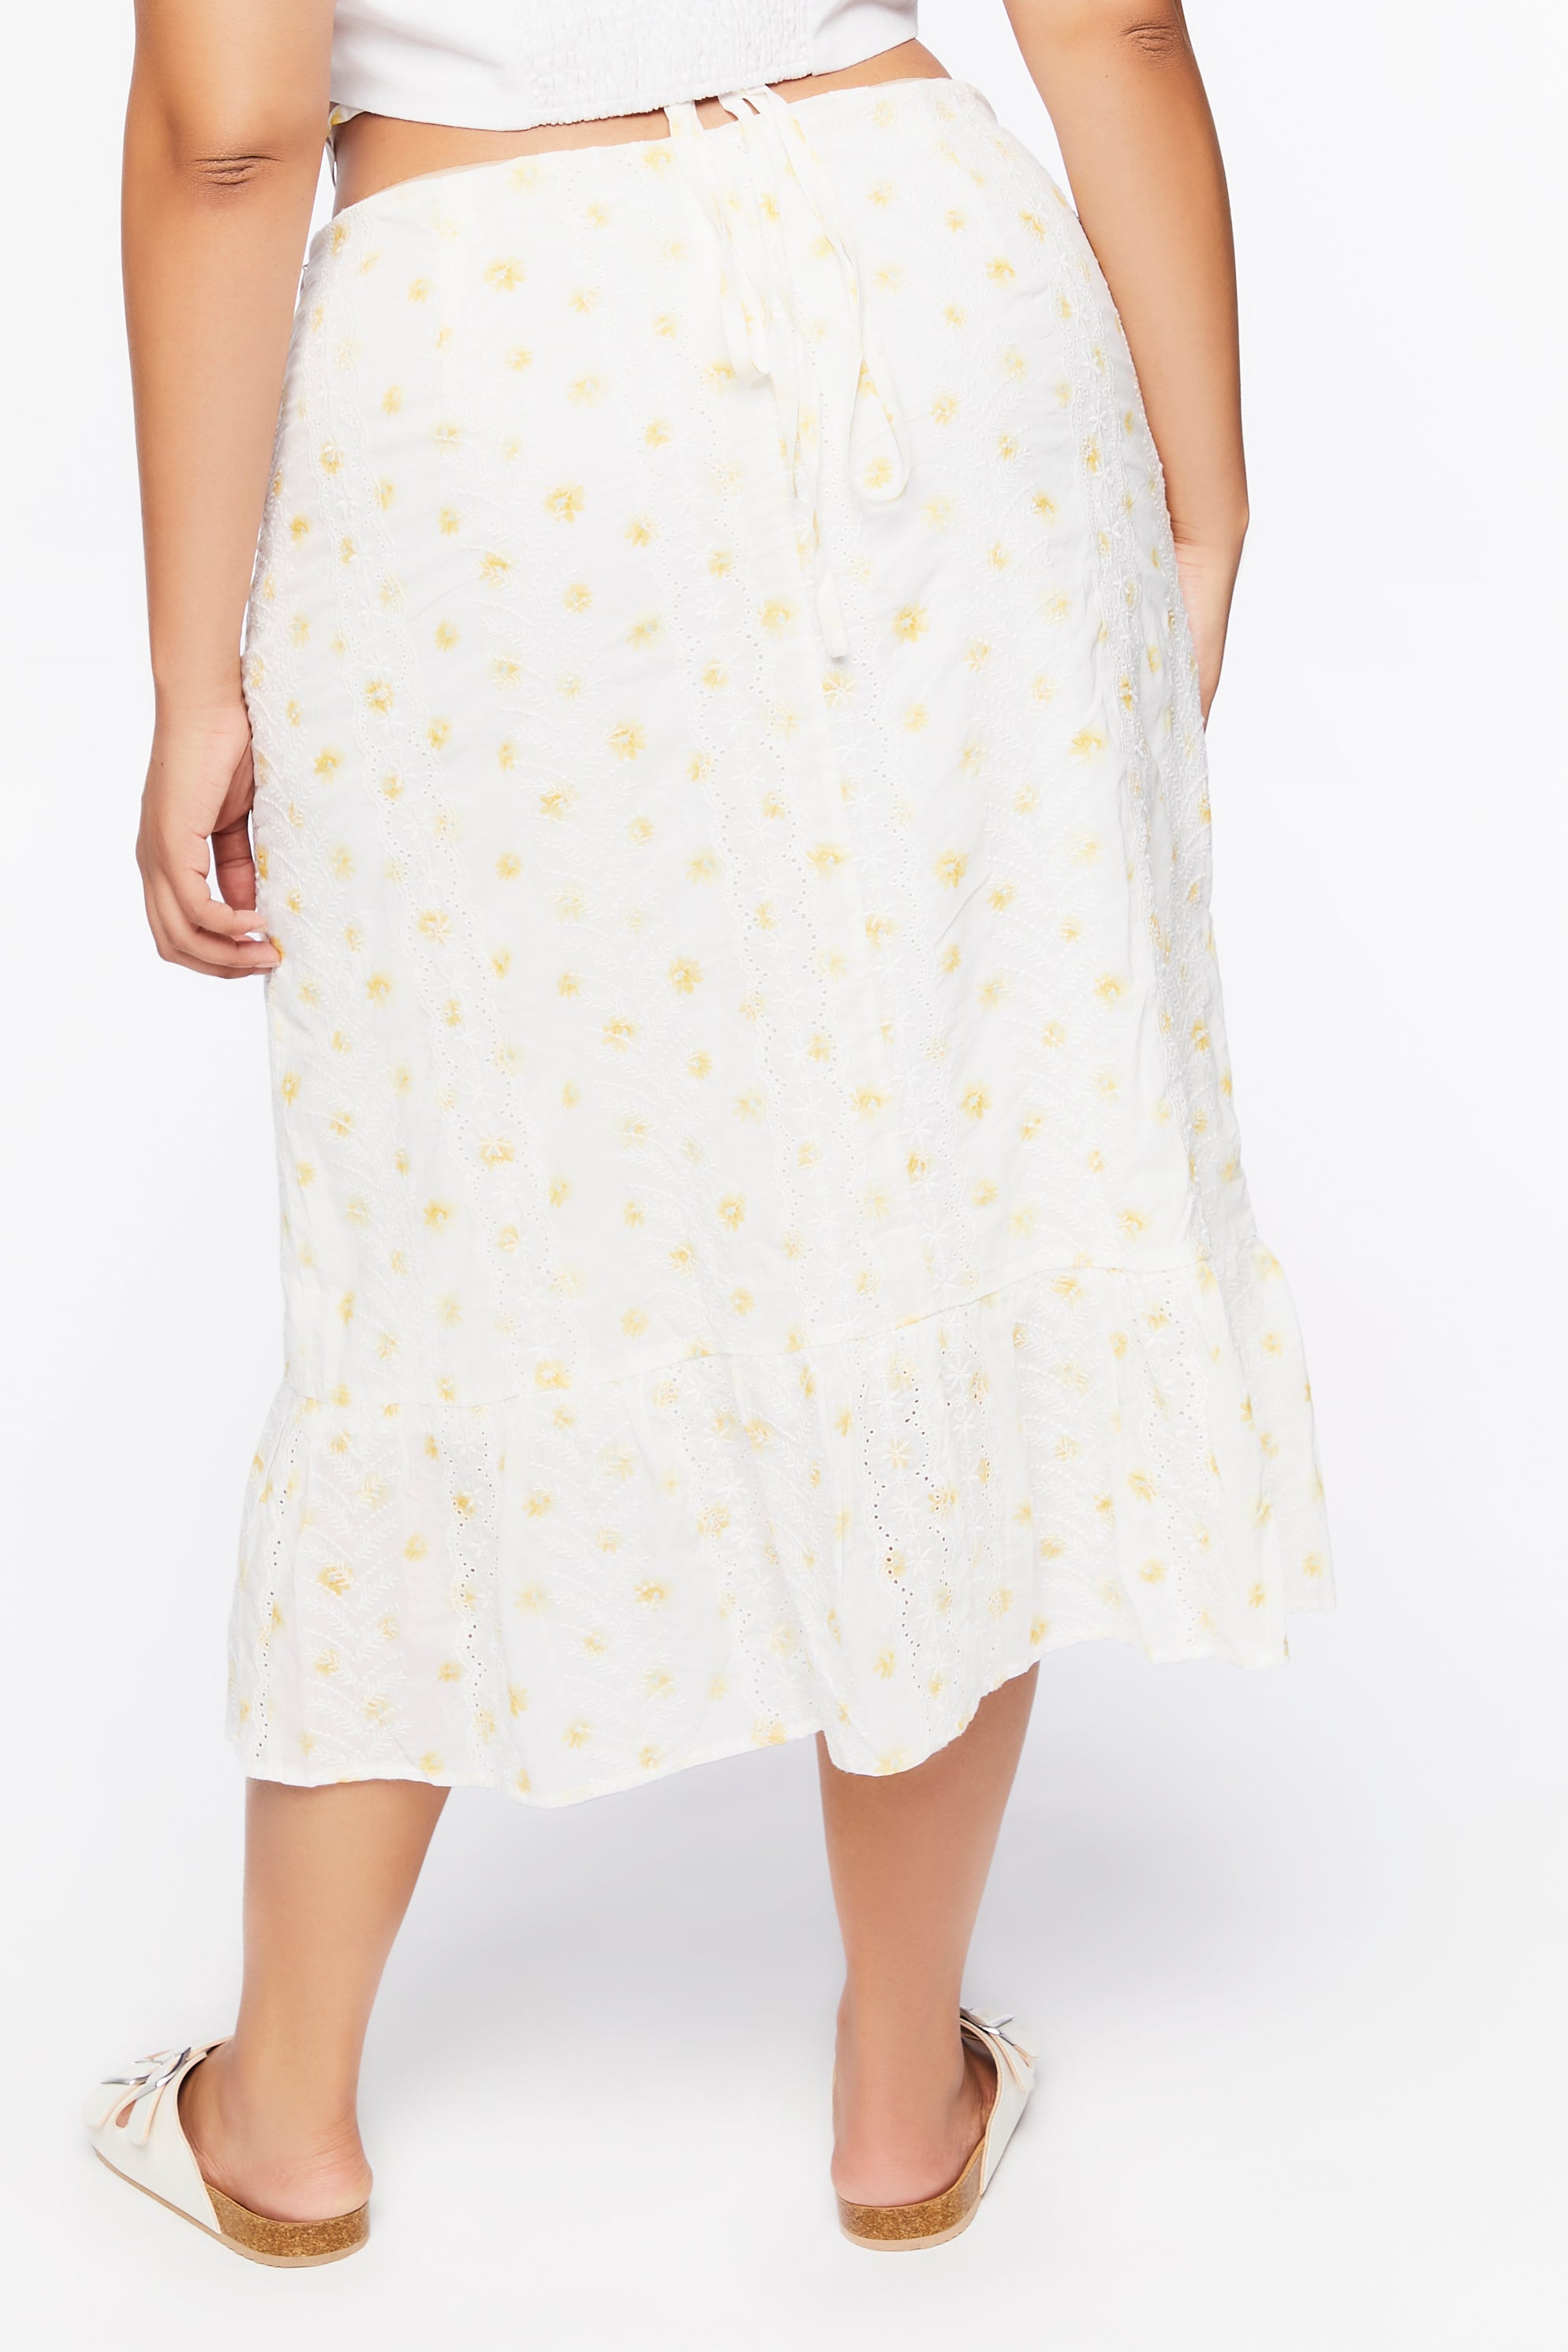 Whitemulti Plus Size Floral Print Shell Midi Skirt 4